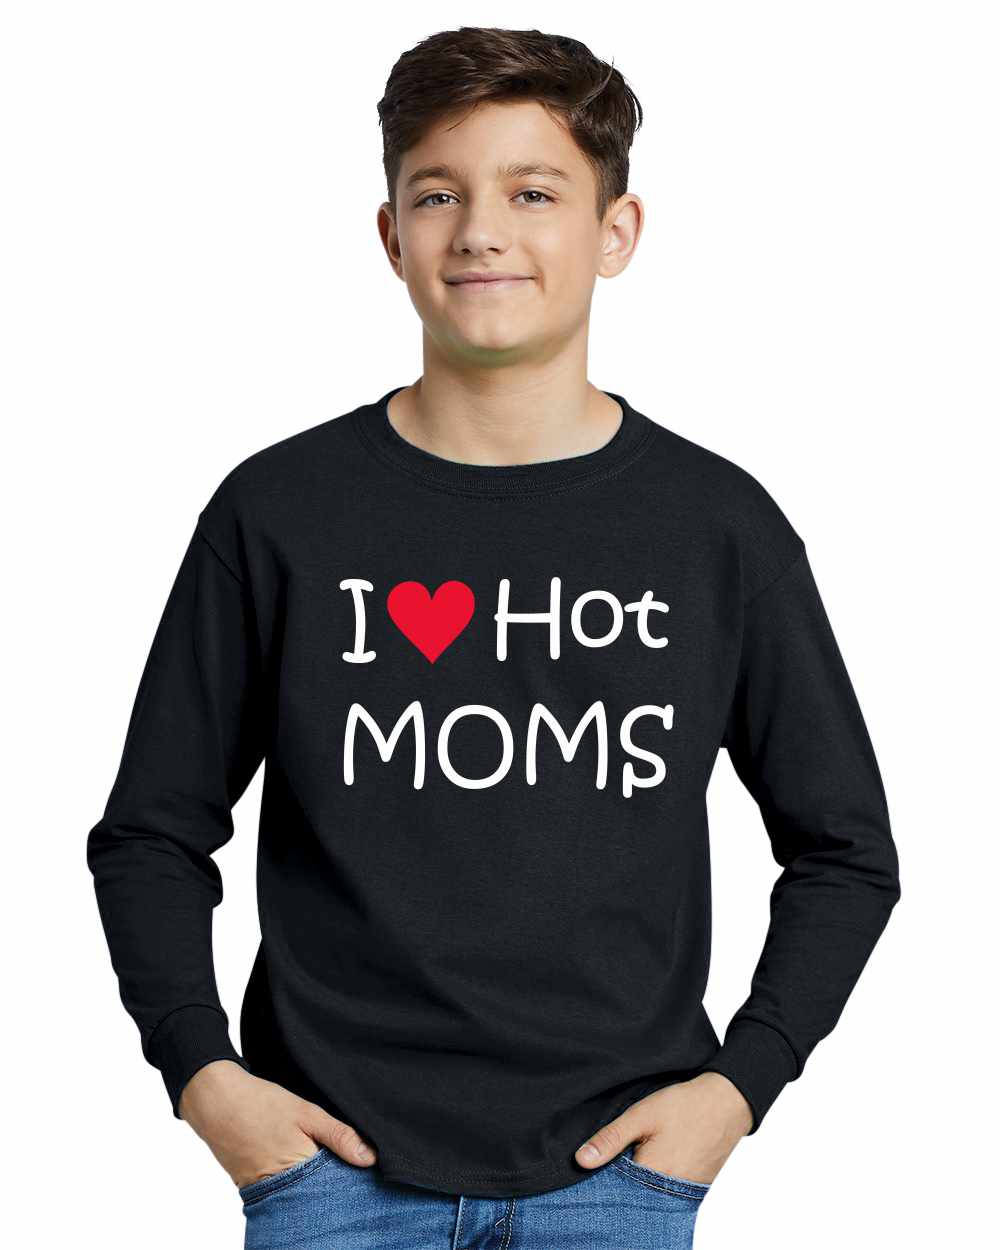 I LOVE HOT MOMS on Youth Long Sleeve Shirt